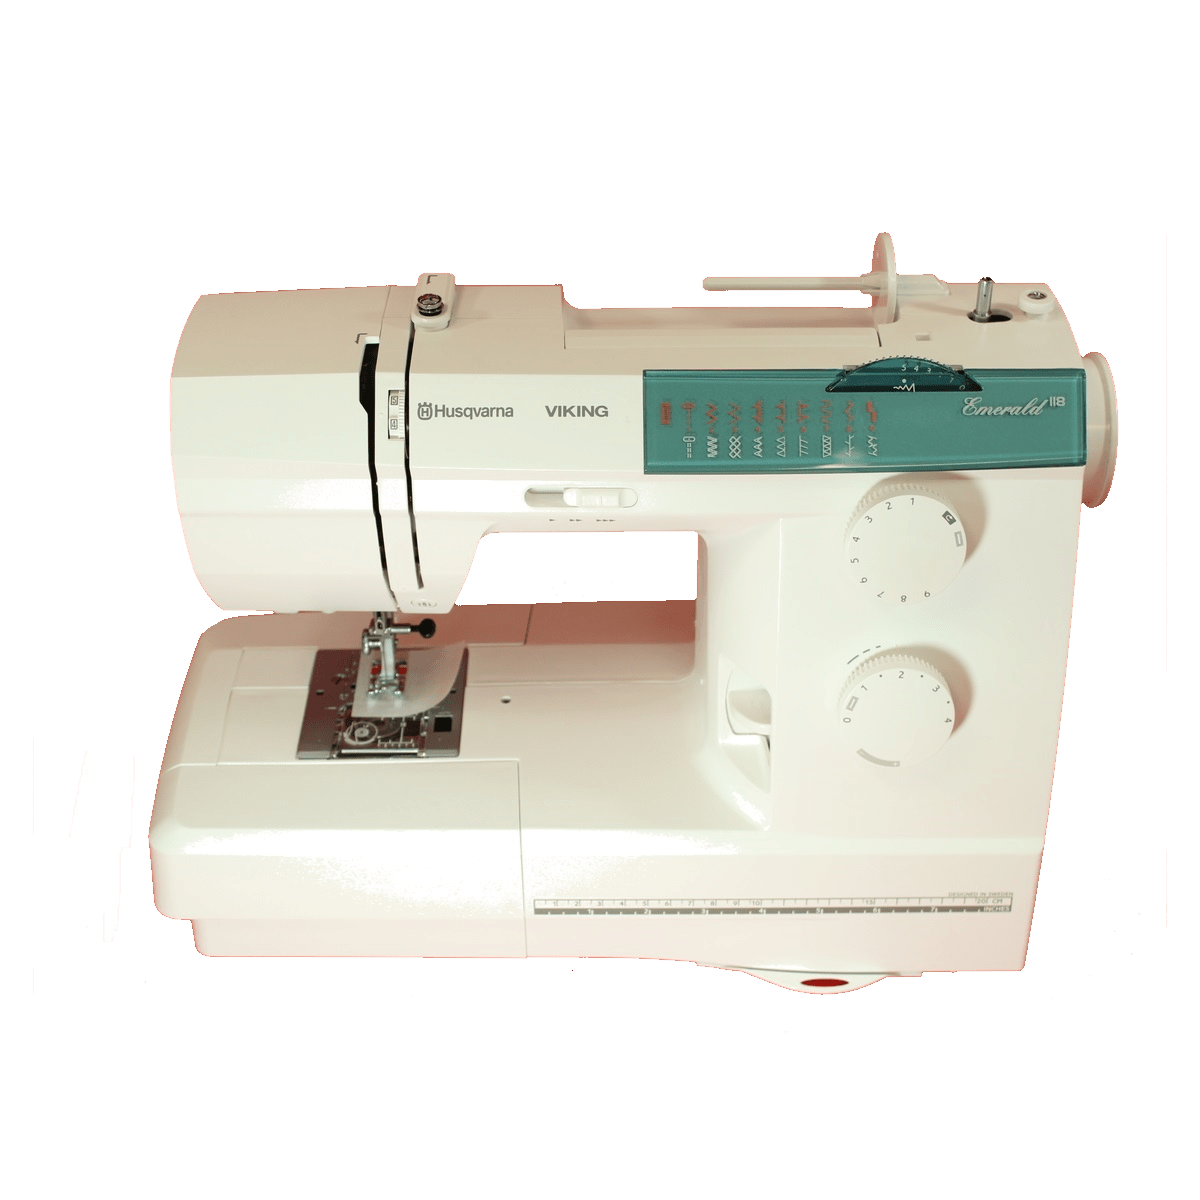 Husqvarna Viking Emerald 118 - Machine Sewing VacuumsRUs